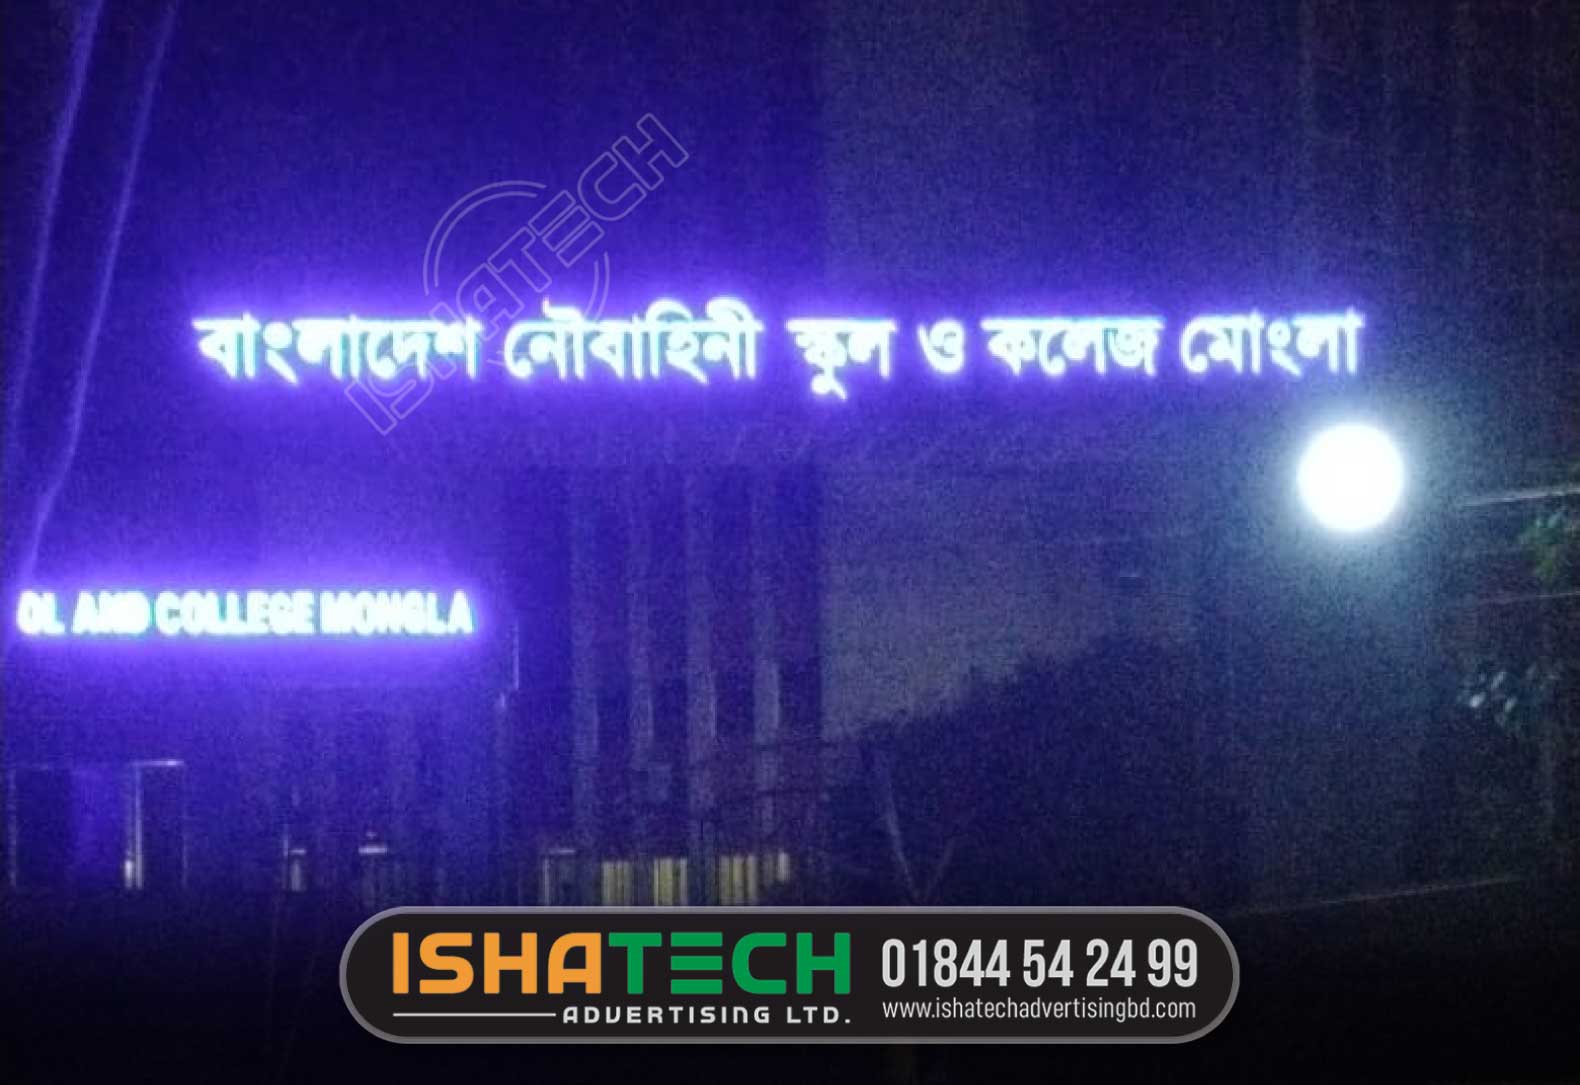 BANGLADESH NAVY SCHOOL COLLEGE MONGLA ACRYLIC LIGHTING BILLBOARD MAKER IN DHAKA BD, BILLBOARD MAKER IN BARISHAL BD